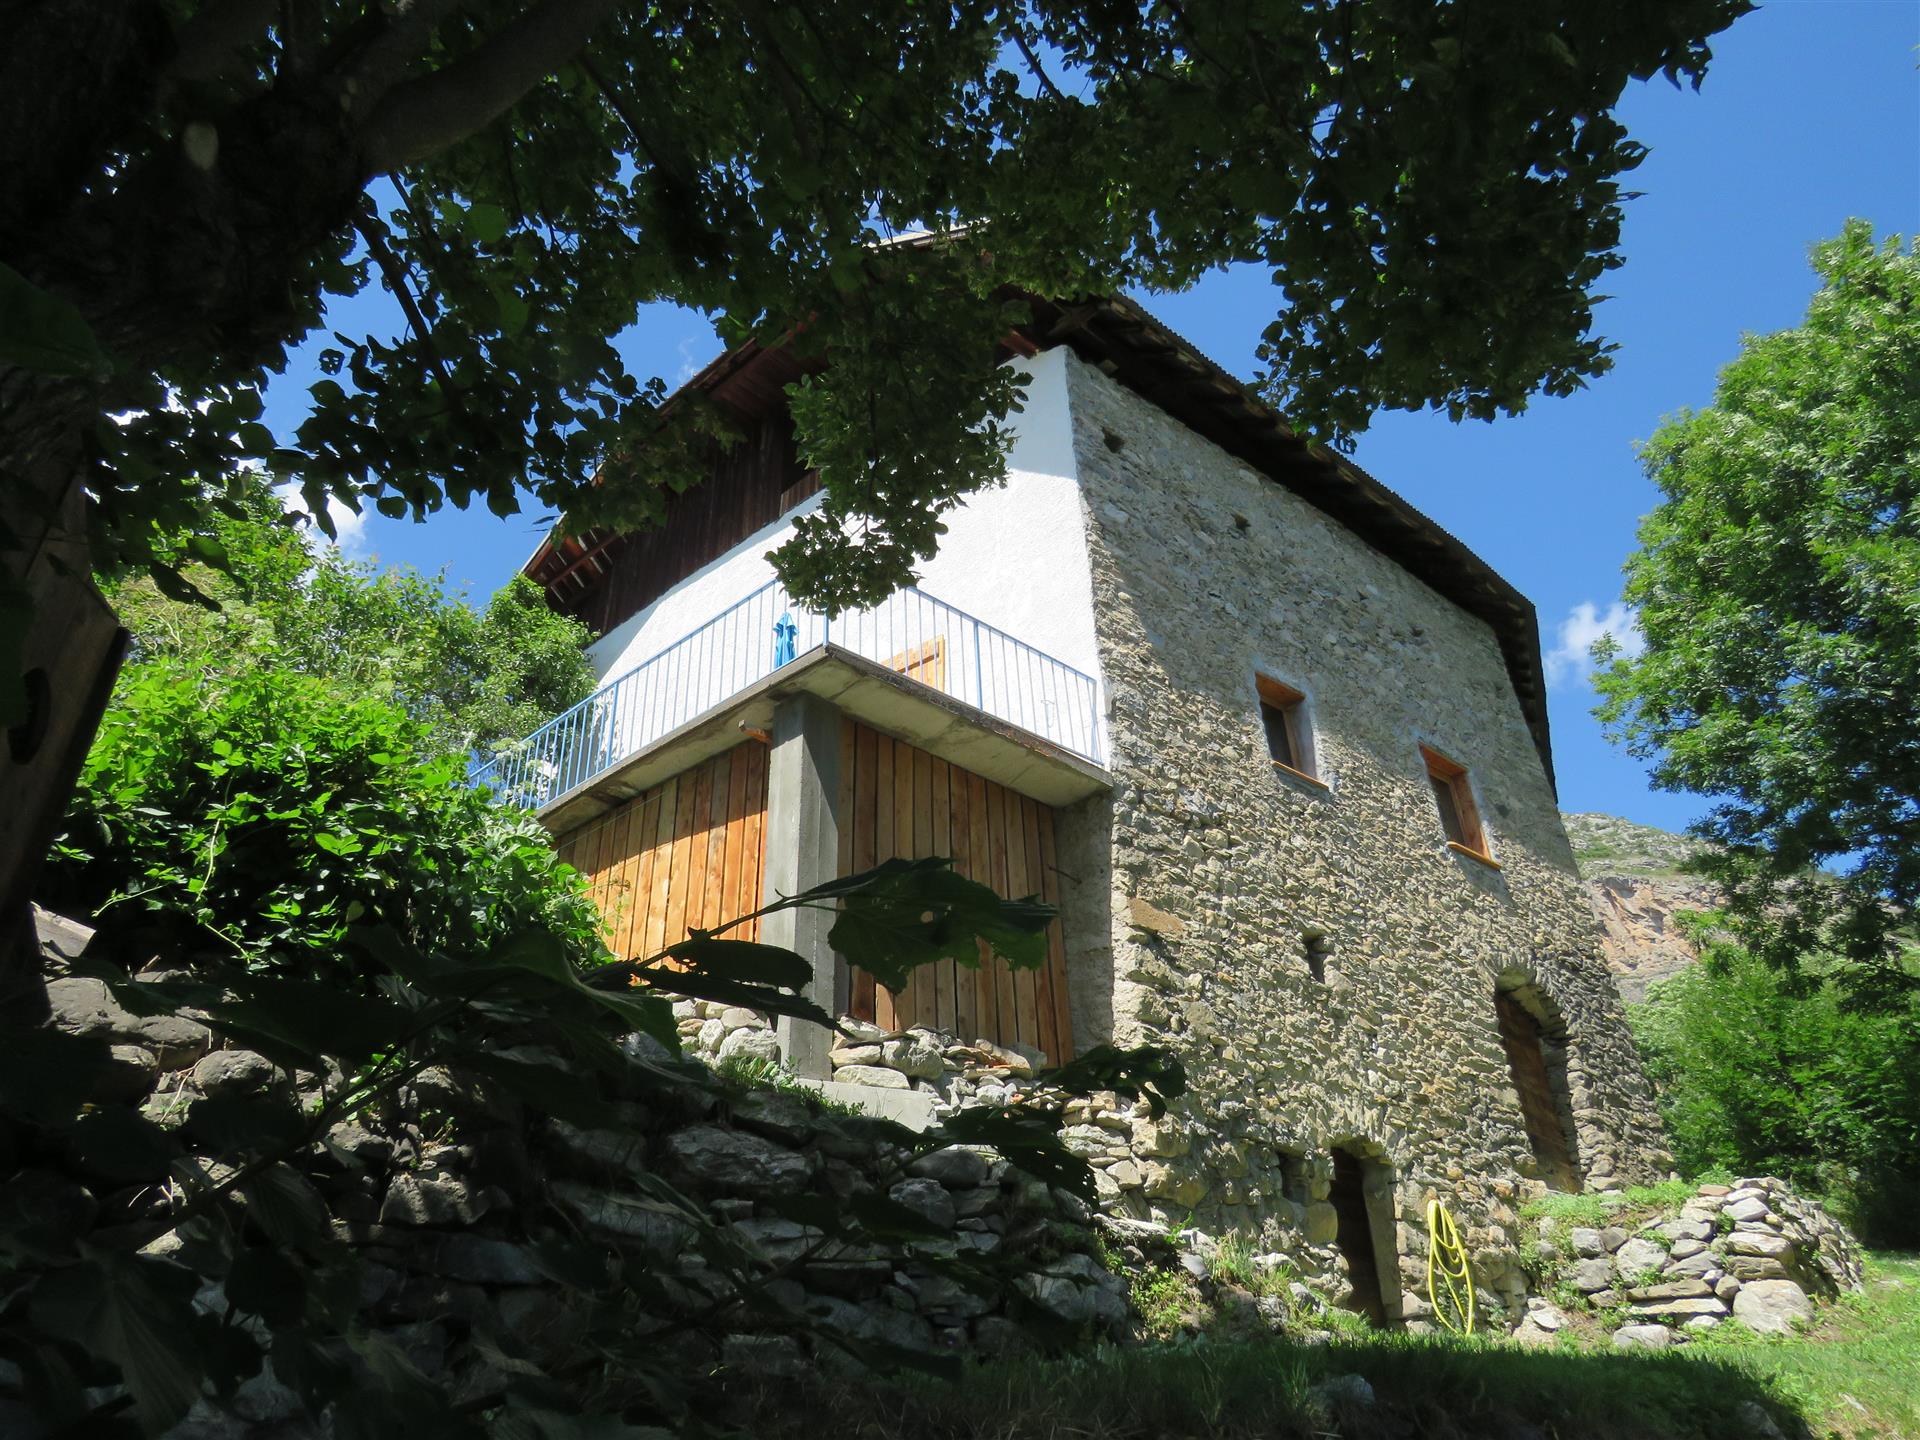 Mountain house